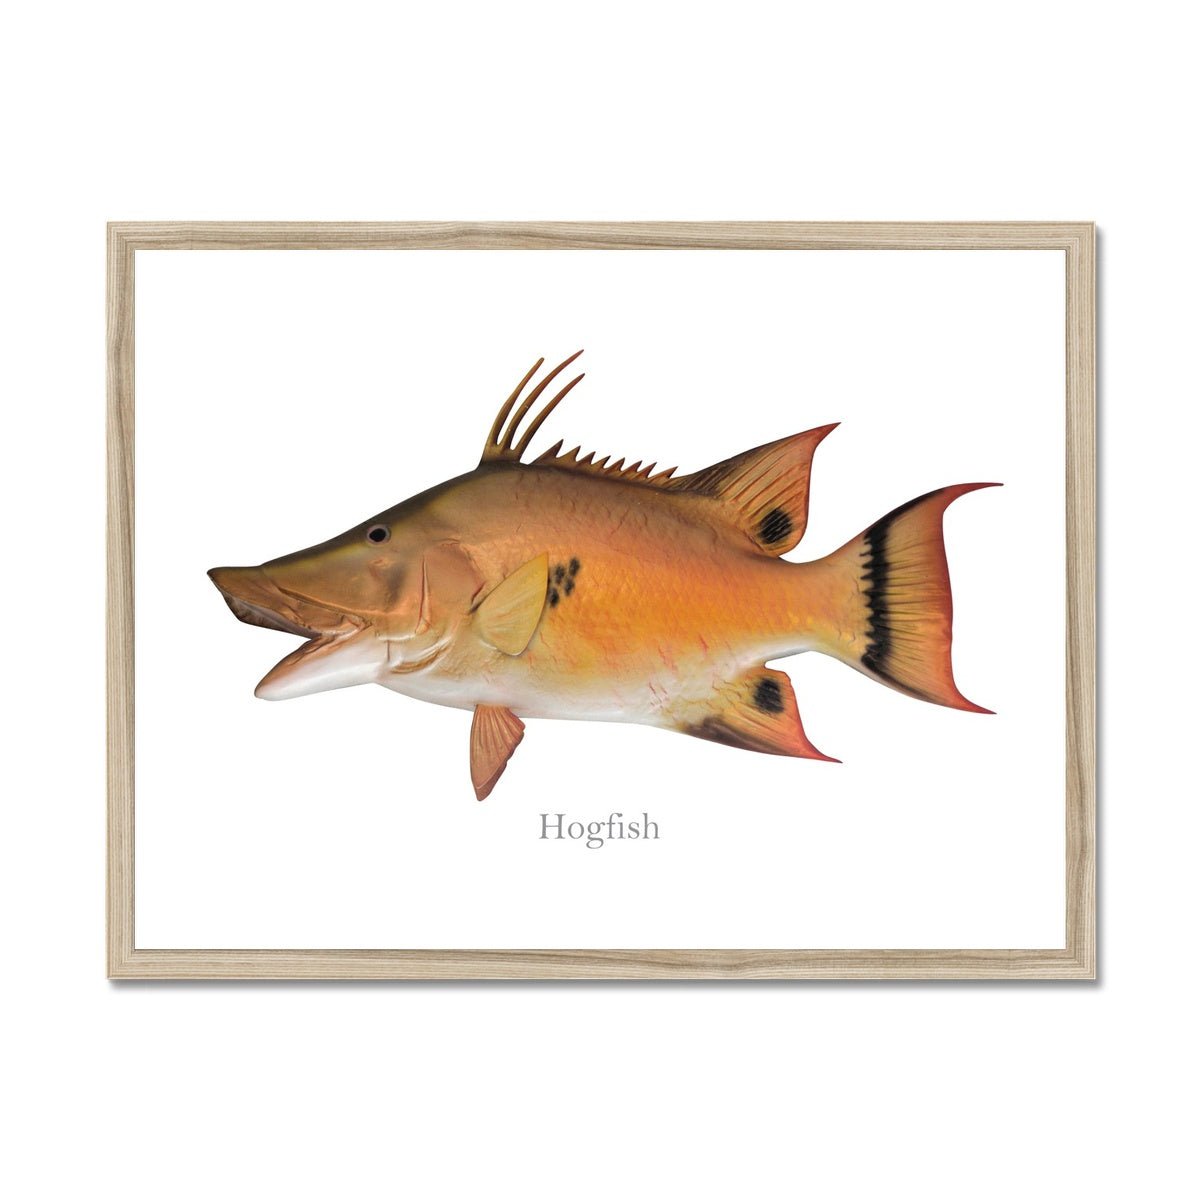 Hogfish - Framed Print - madfishlab.com